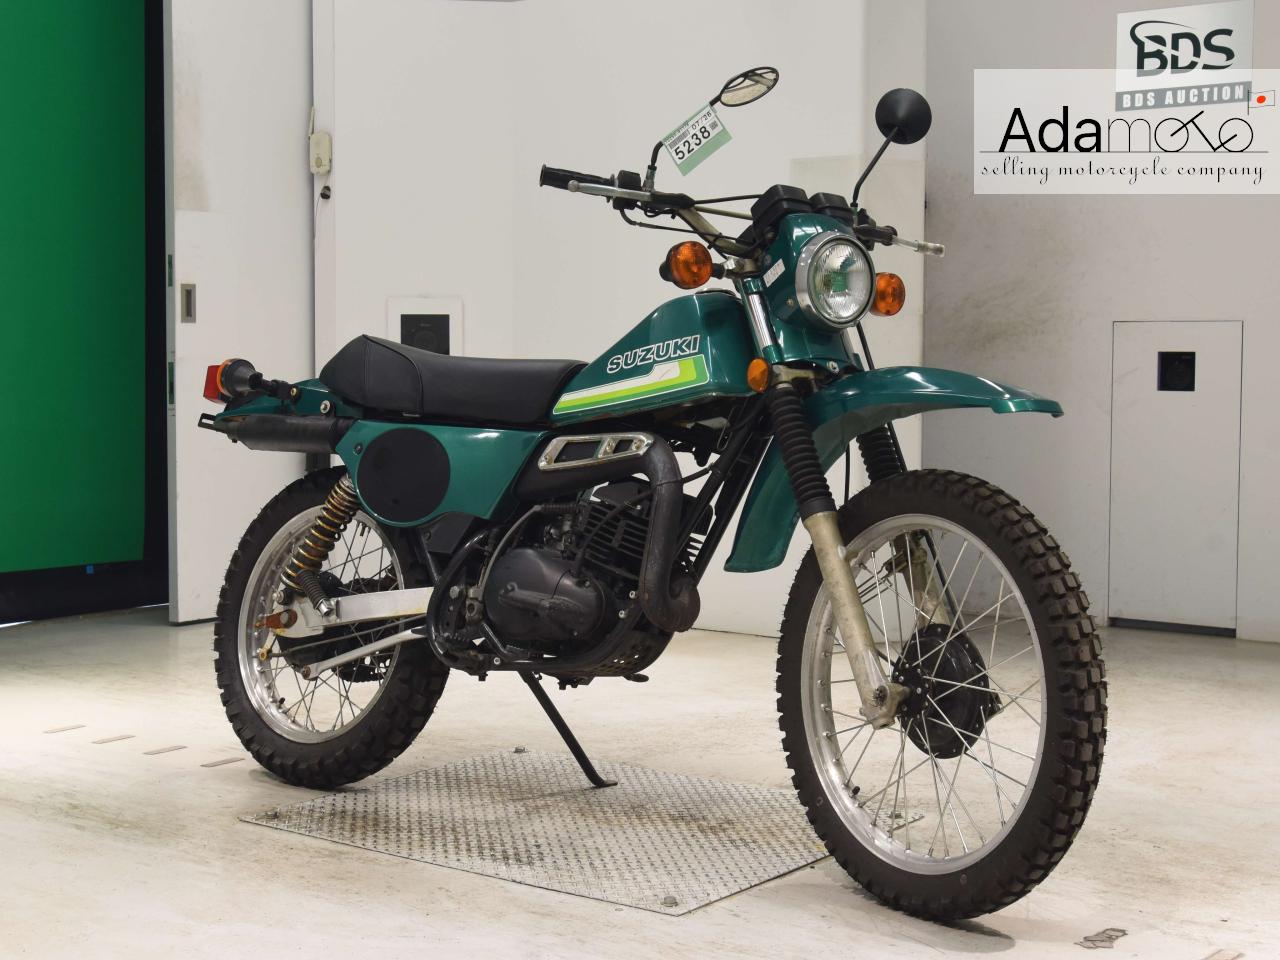 Suzuki TS250 - Adamoto - Motorcycles from Japan